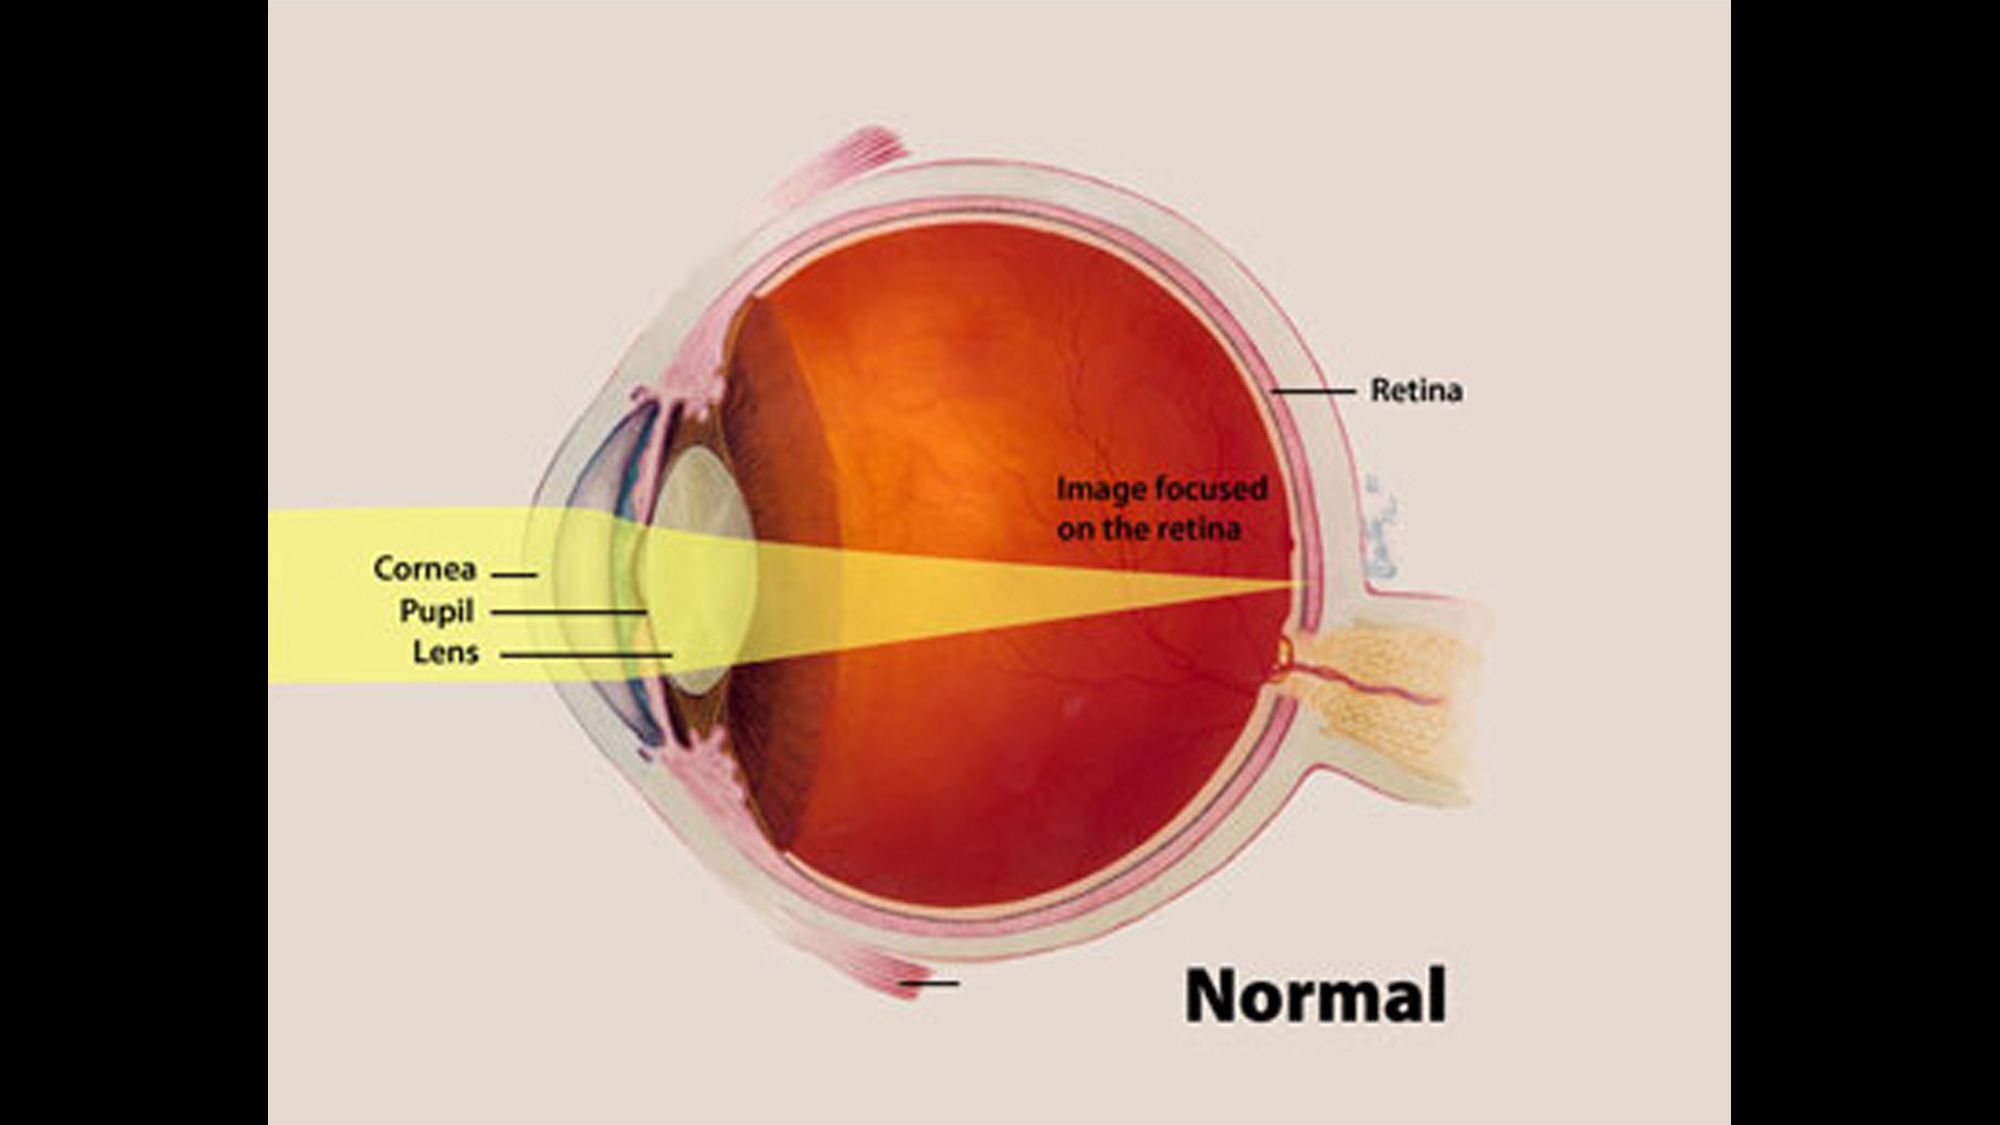 normal retina